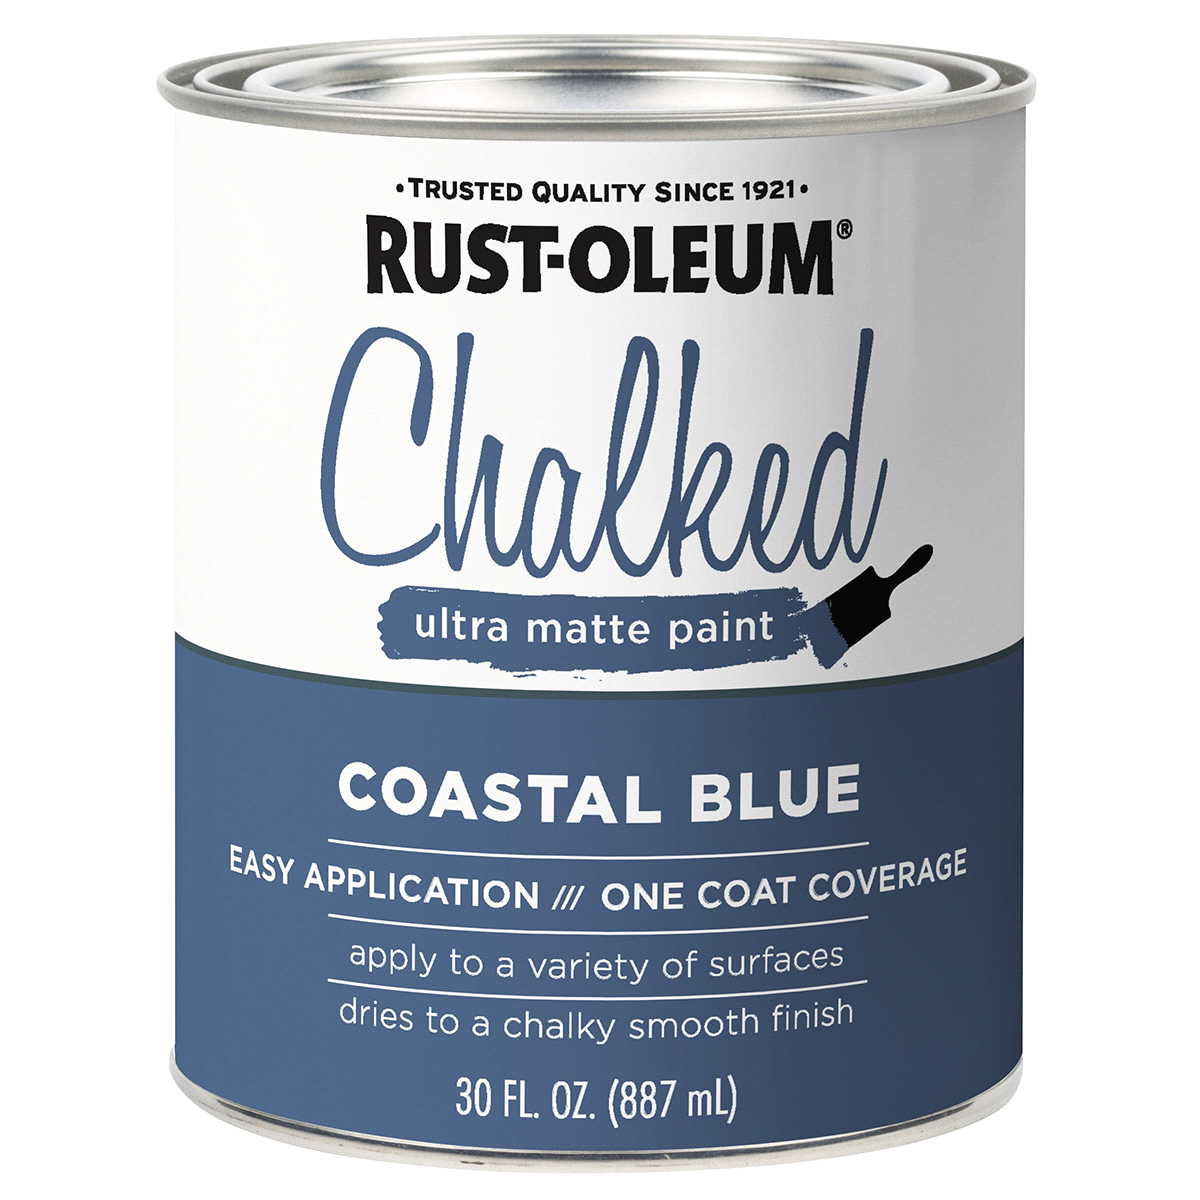 slide 1 of 1, Rust-Oleum Chalked Ultra Matte Paint - 329207, Quart, Coastal Blue, 30 fl oz